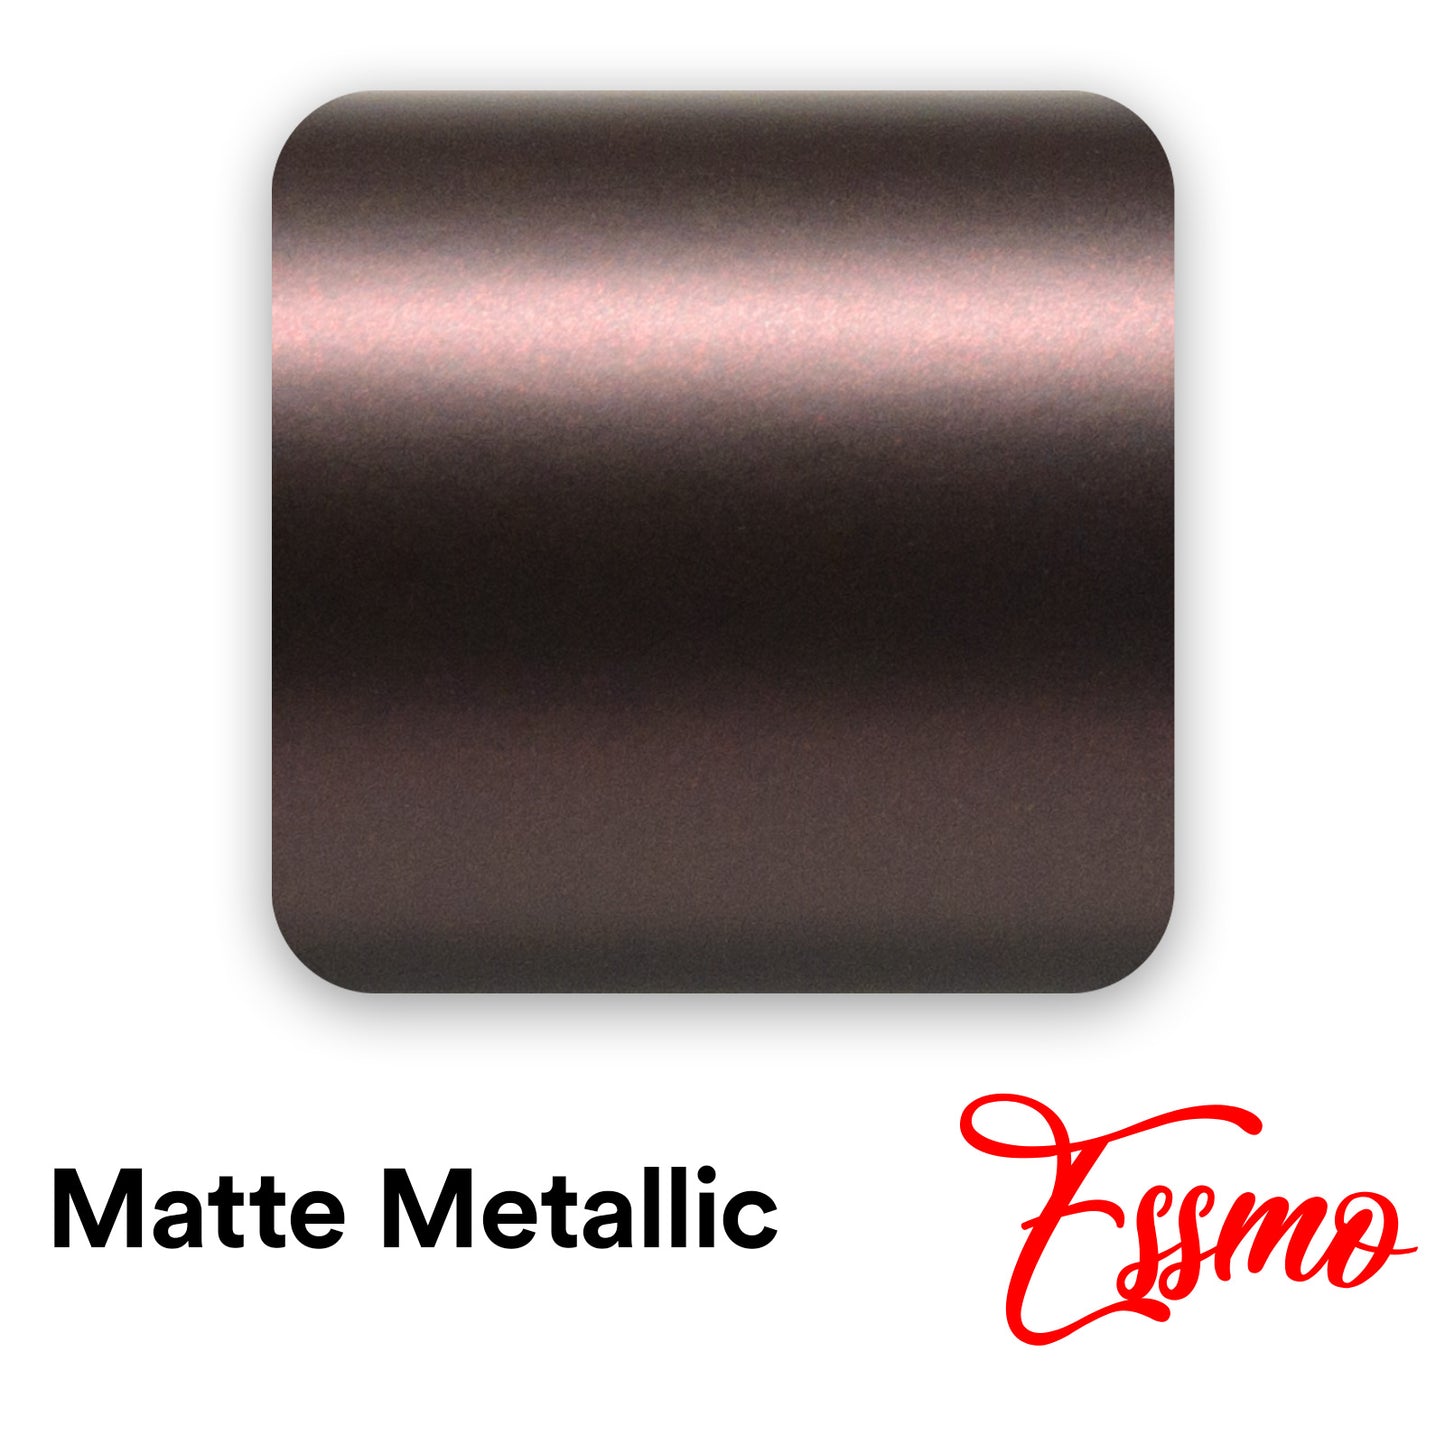 Matte Metallic Blackish Red Vinyl Wrap